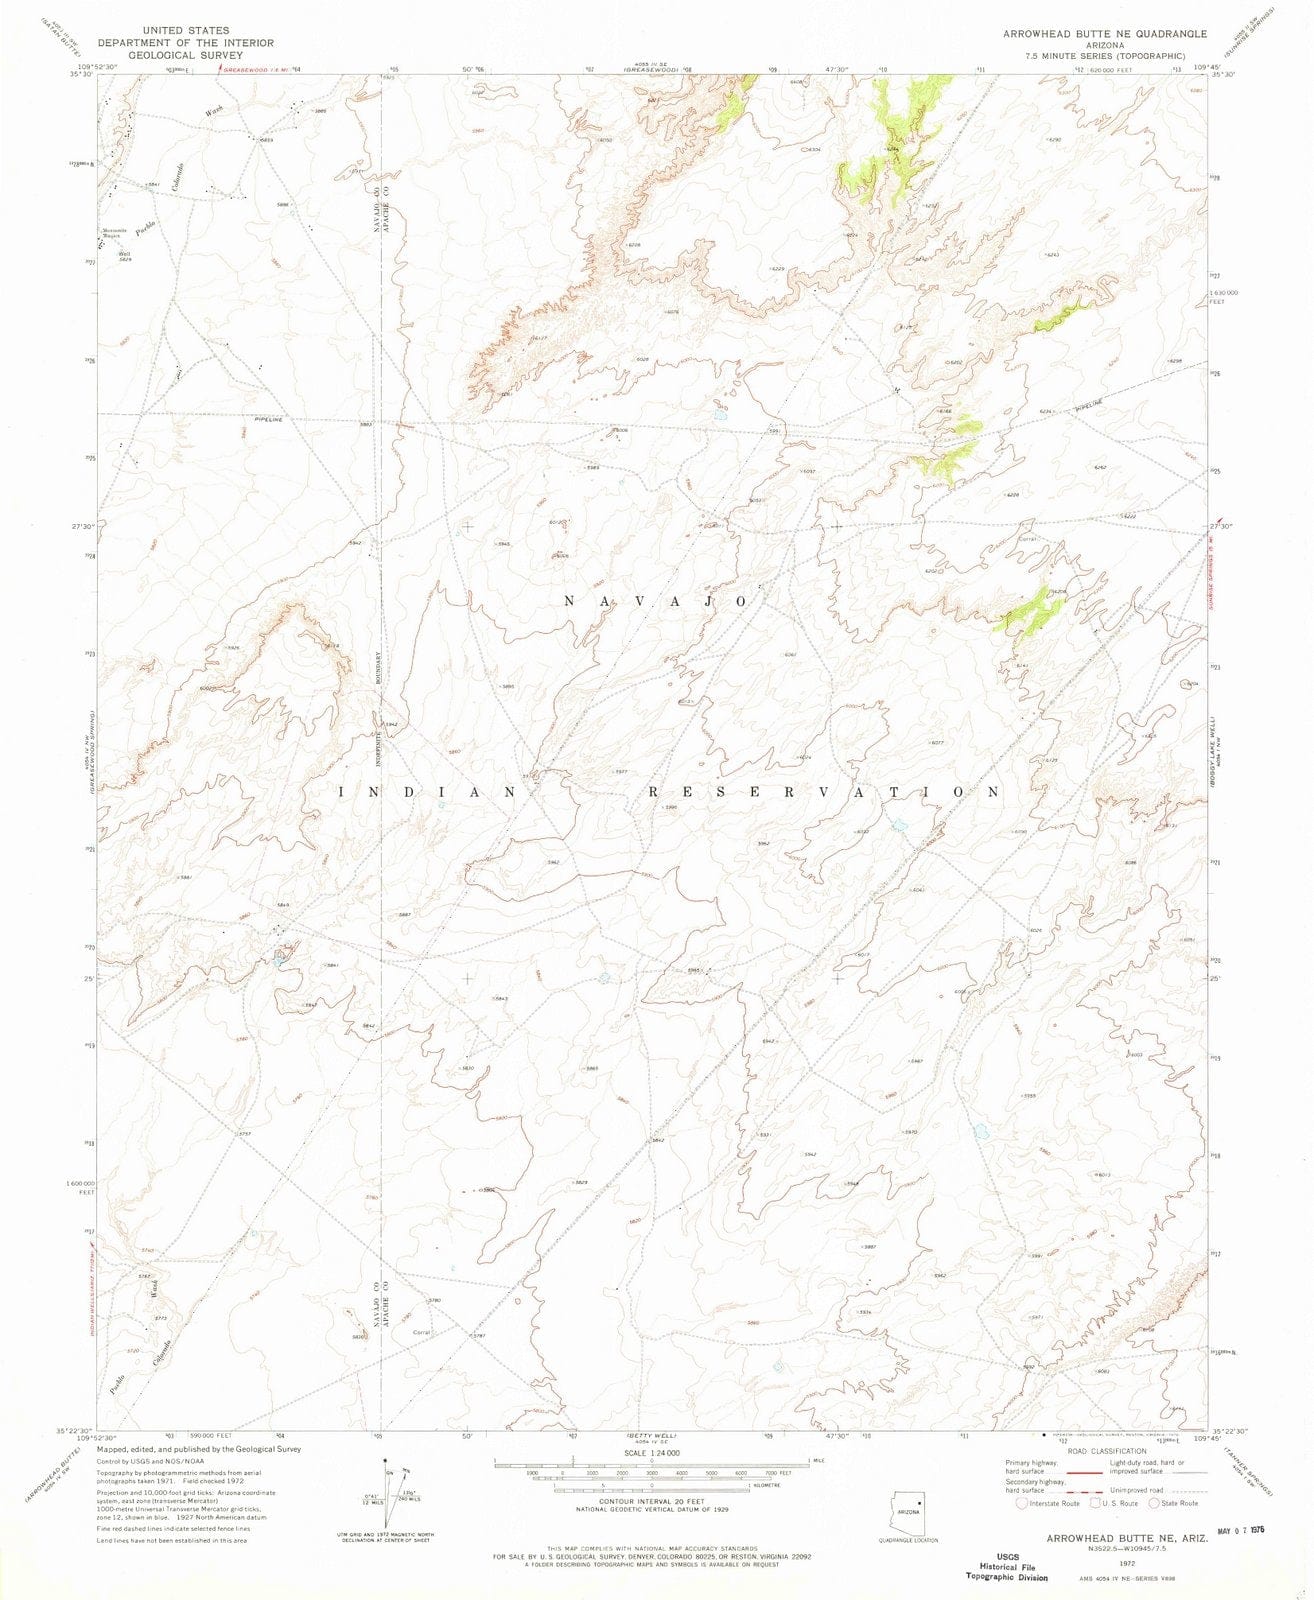 1972 Arrowhead Butte, AZ - Arizona - USGS Topographic Map